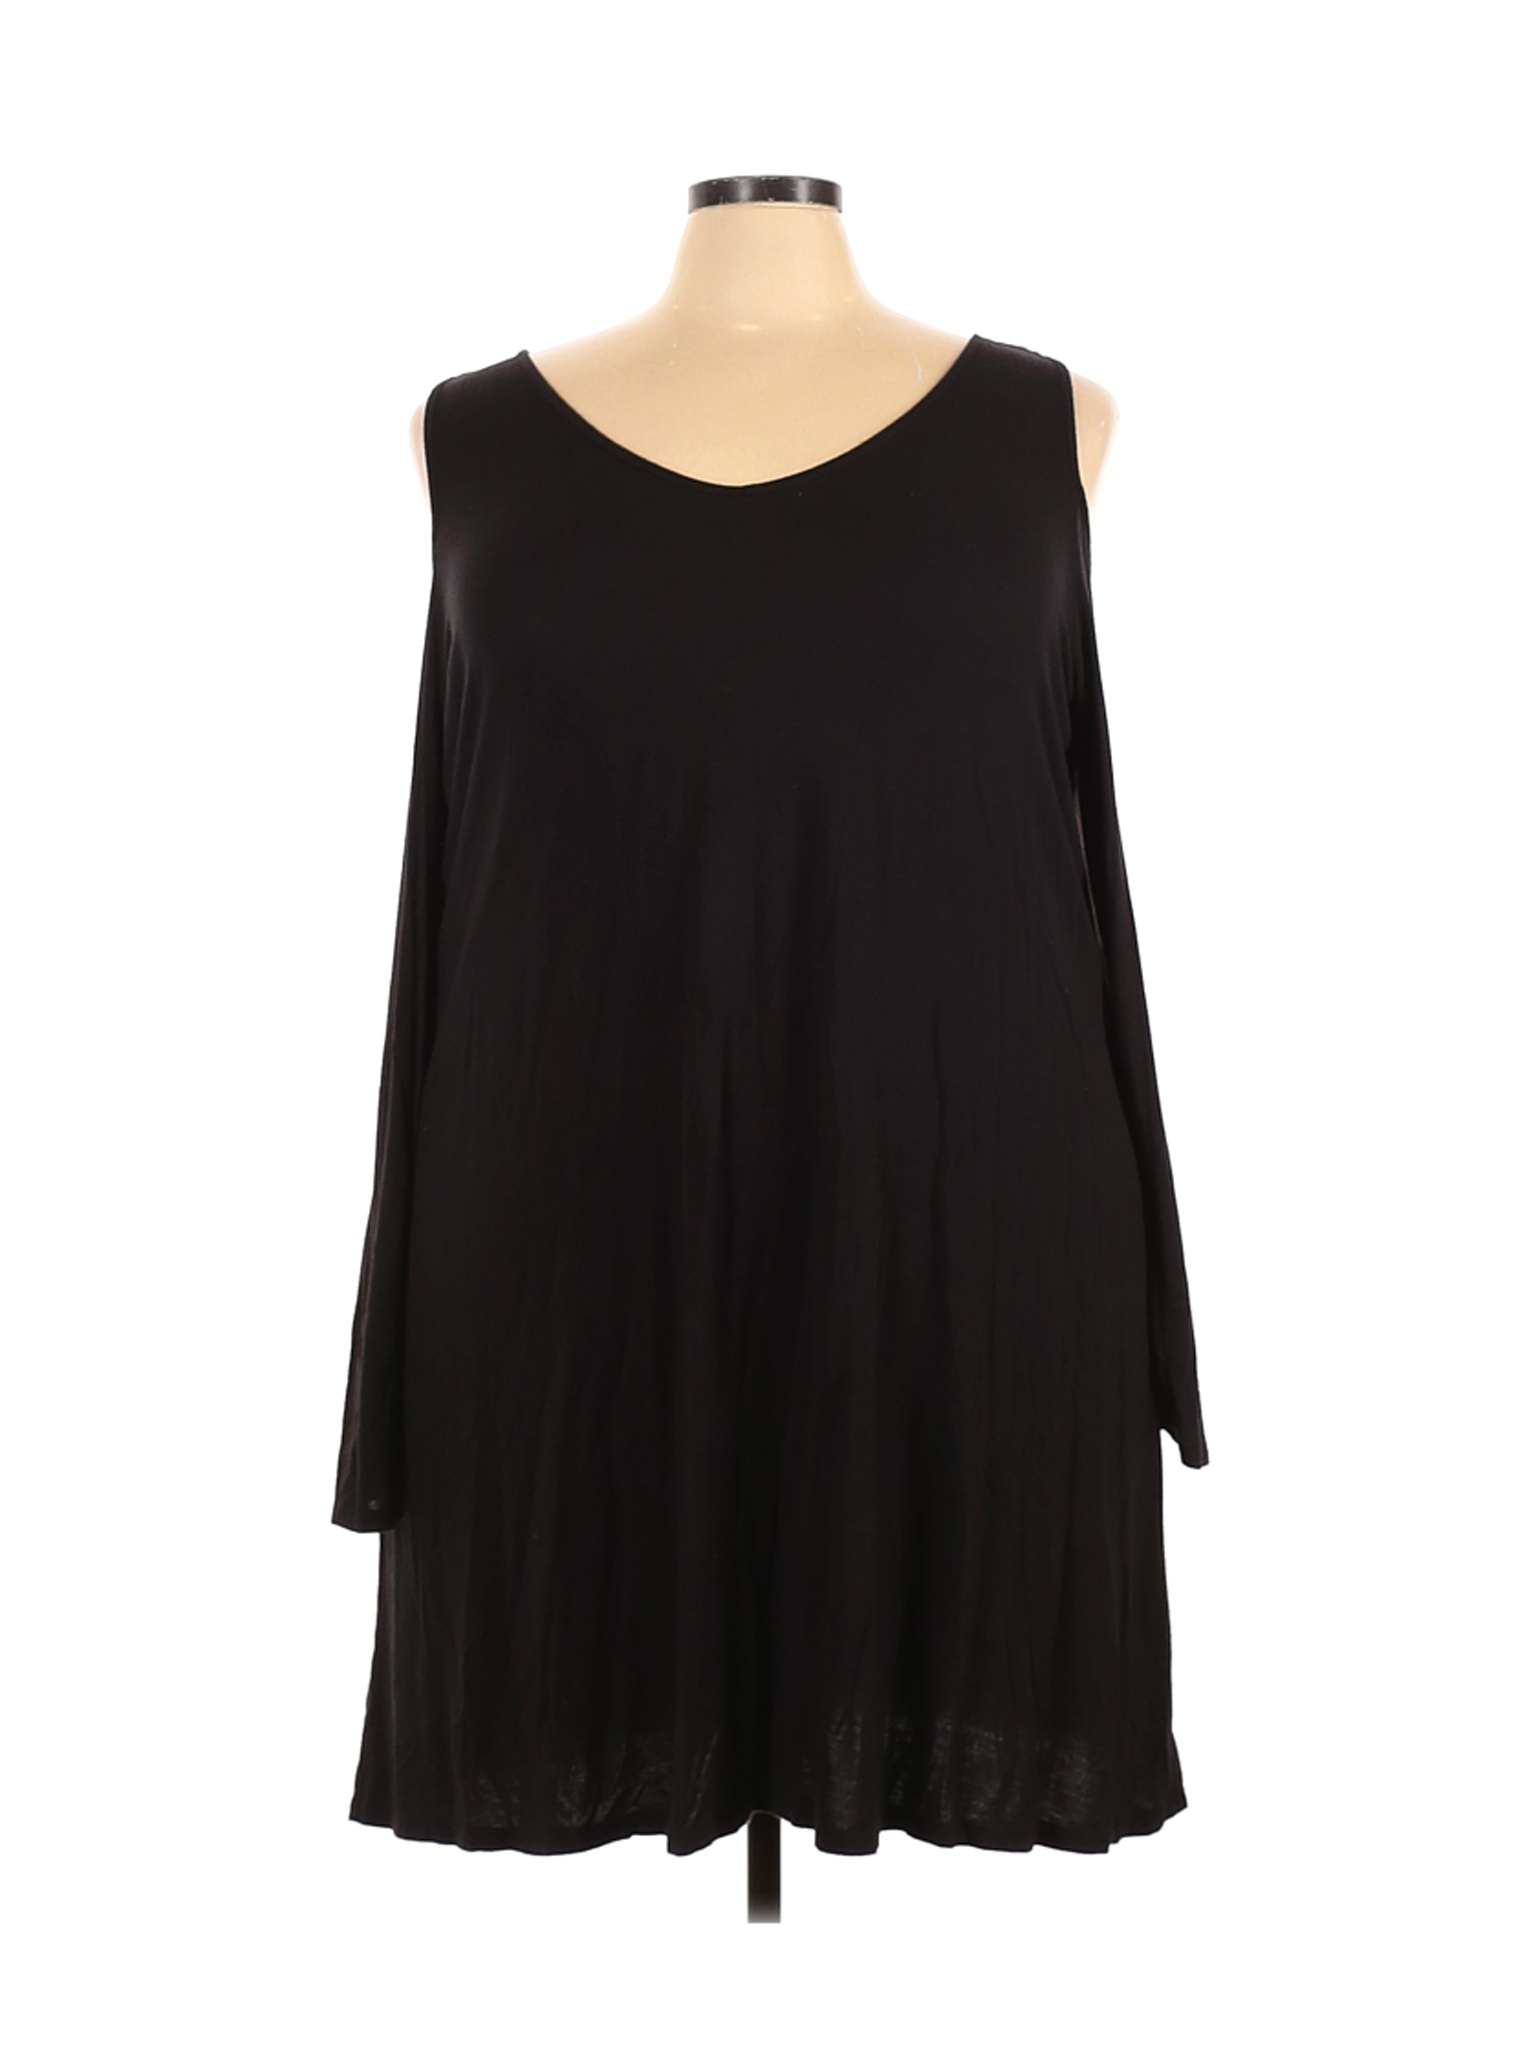 Maurices Women Black Casual Dress 24 Plus | eBay